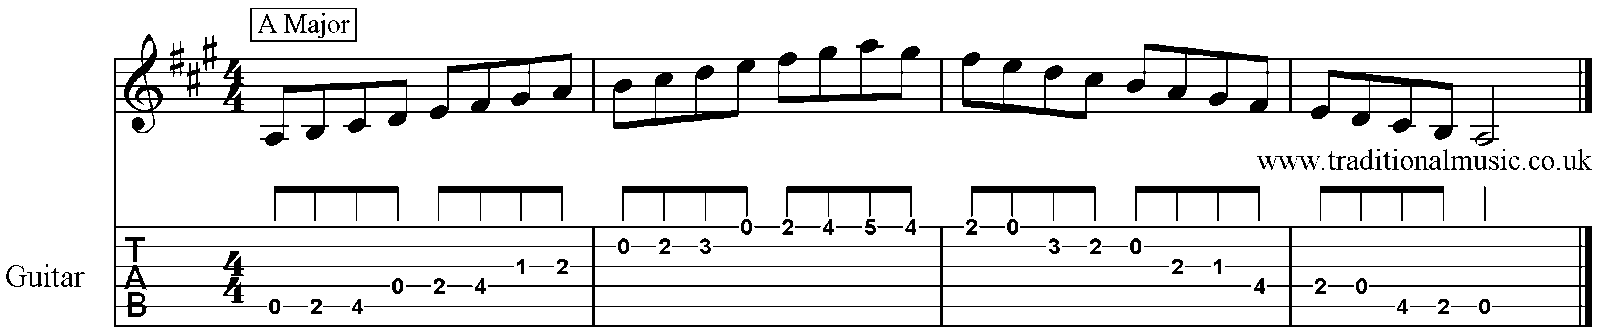 Major Scales for Banjo A